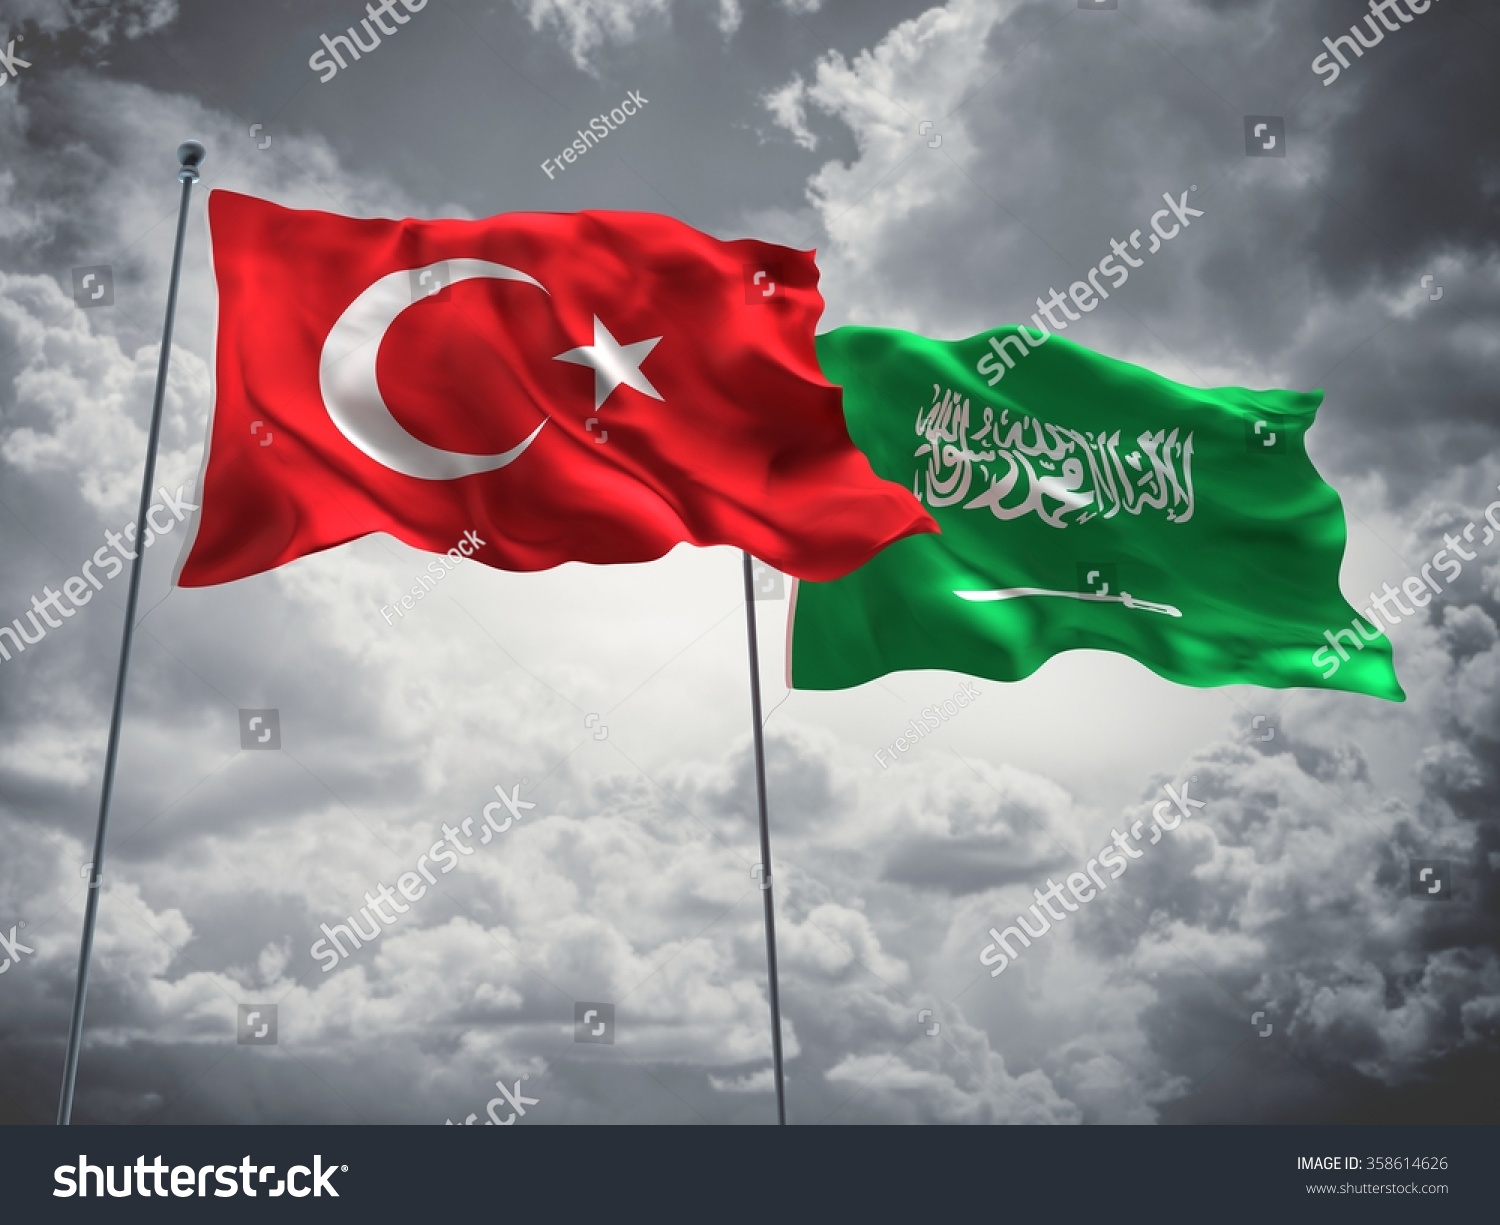 stock-photo-turkey-saudi-arabia-flags-are-waving-in-the-sky-with-dark-clouds-358614626.jpg